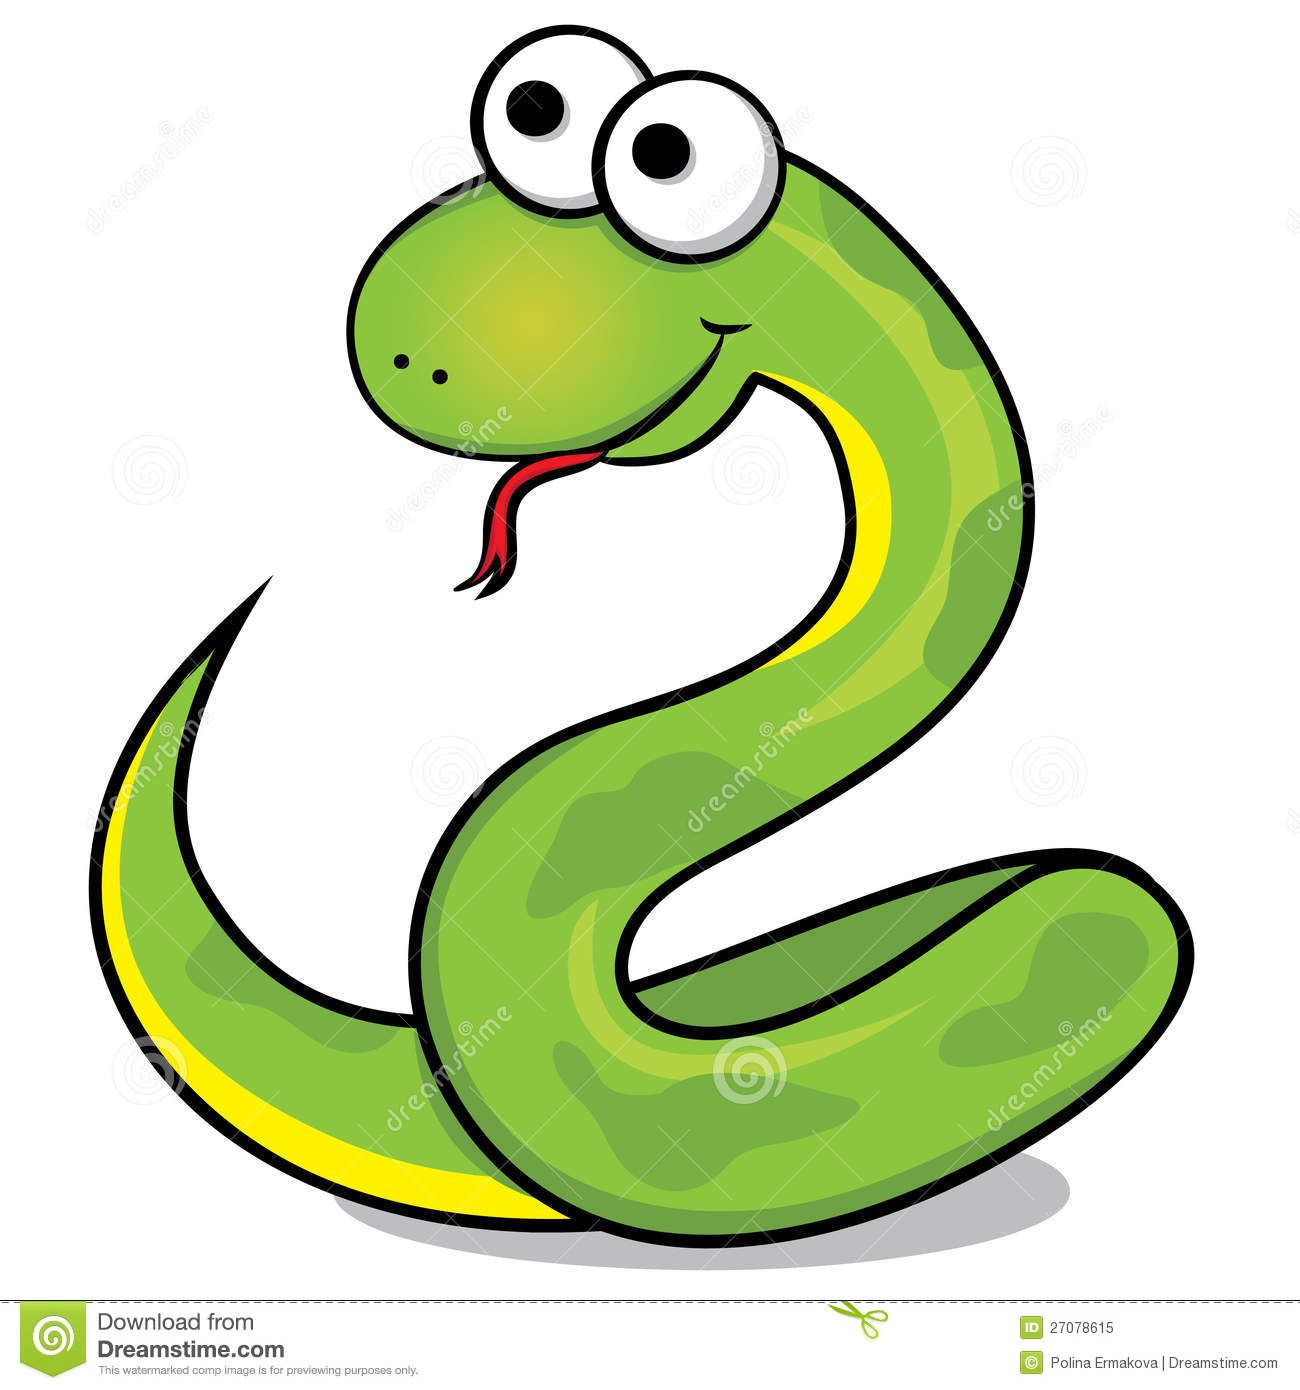 Anaconda stock illustrations.